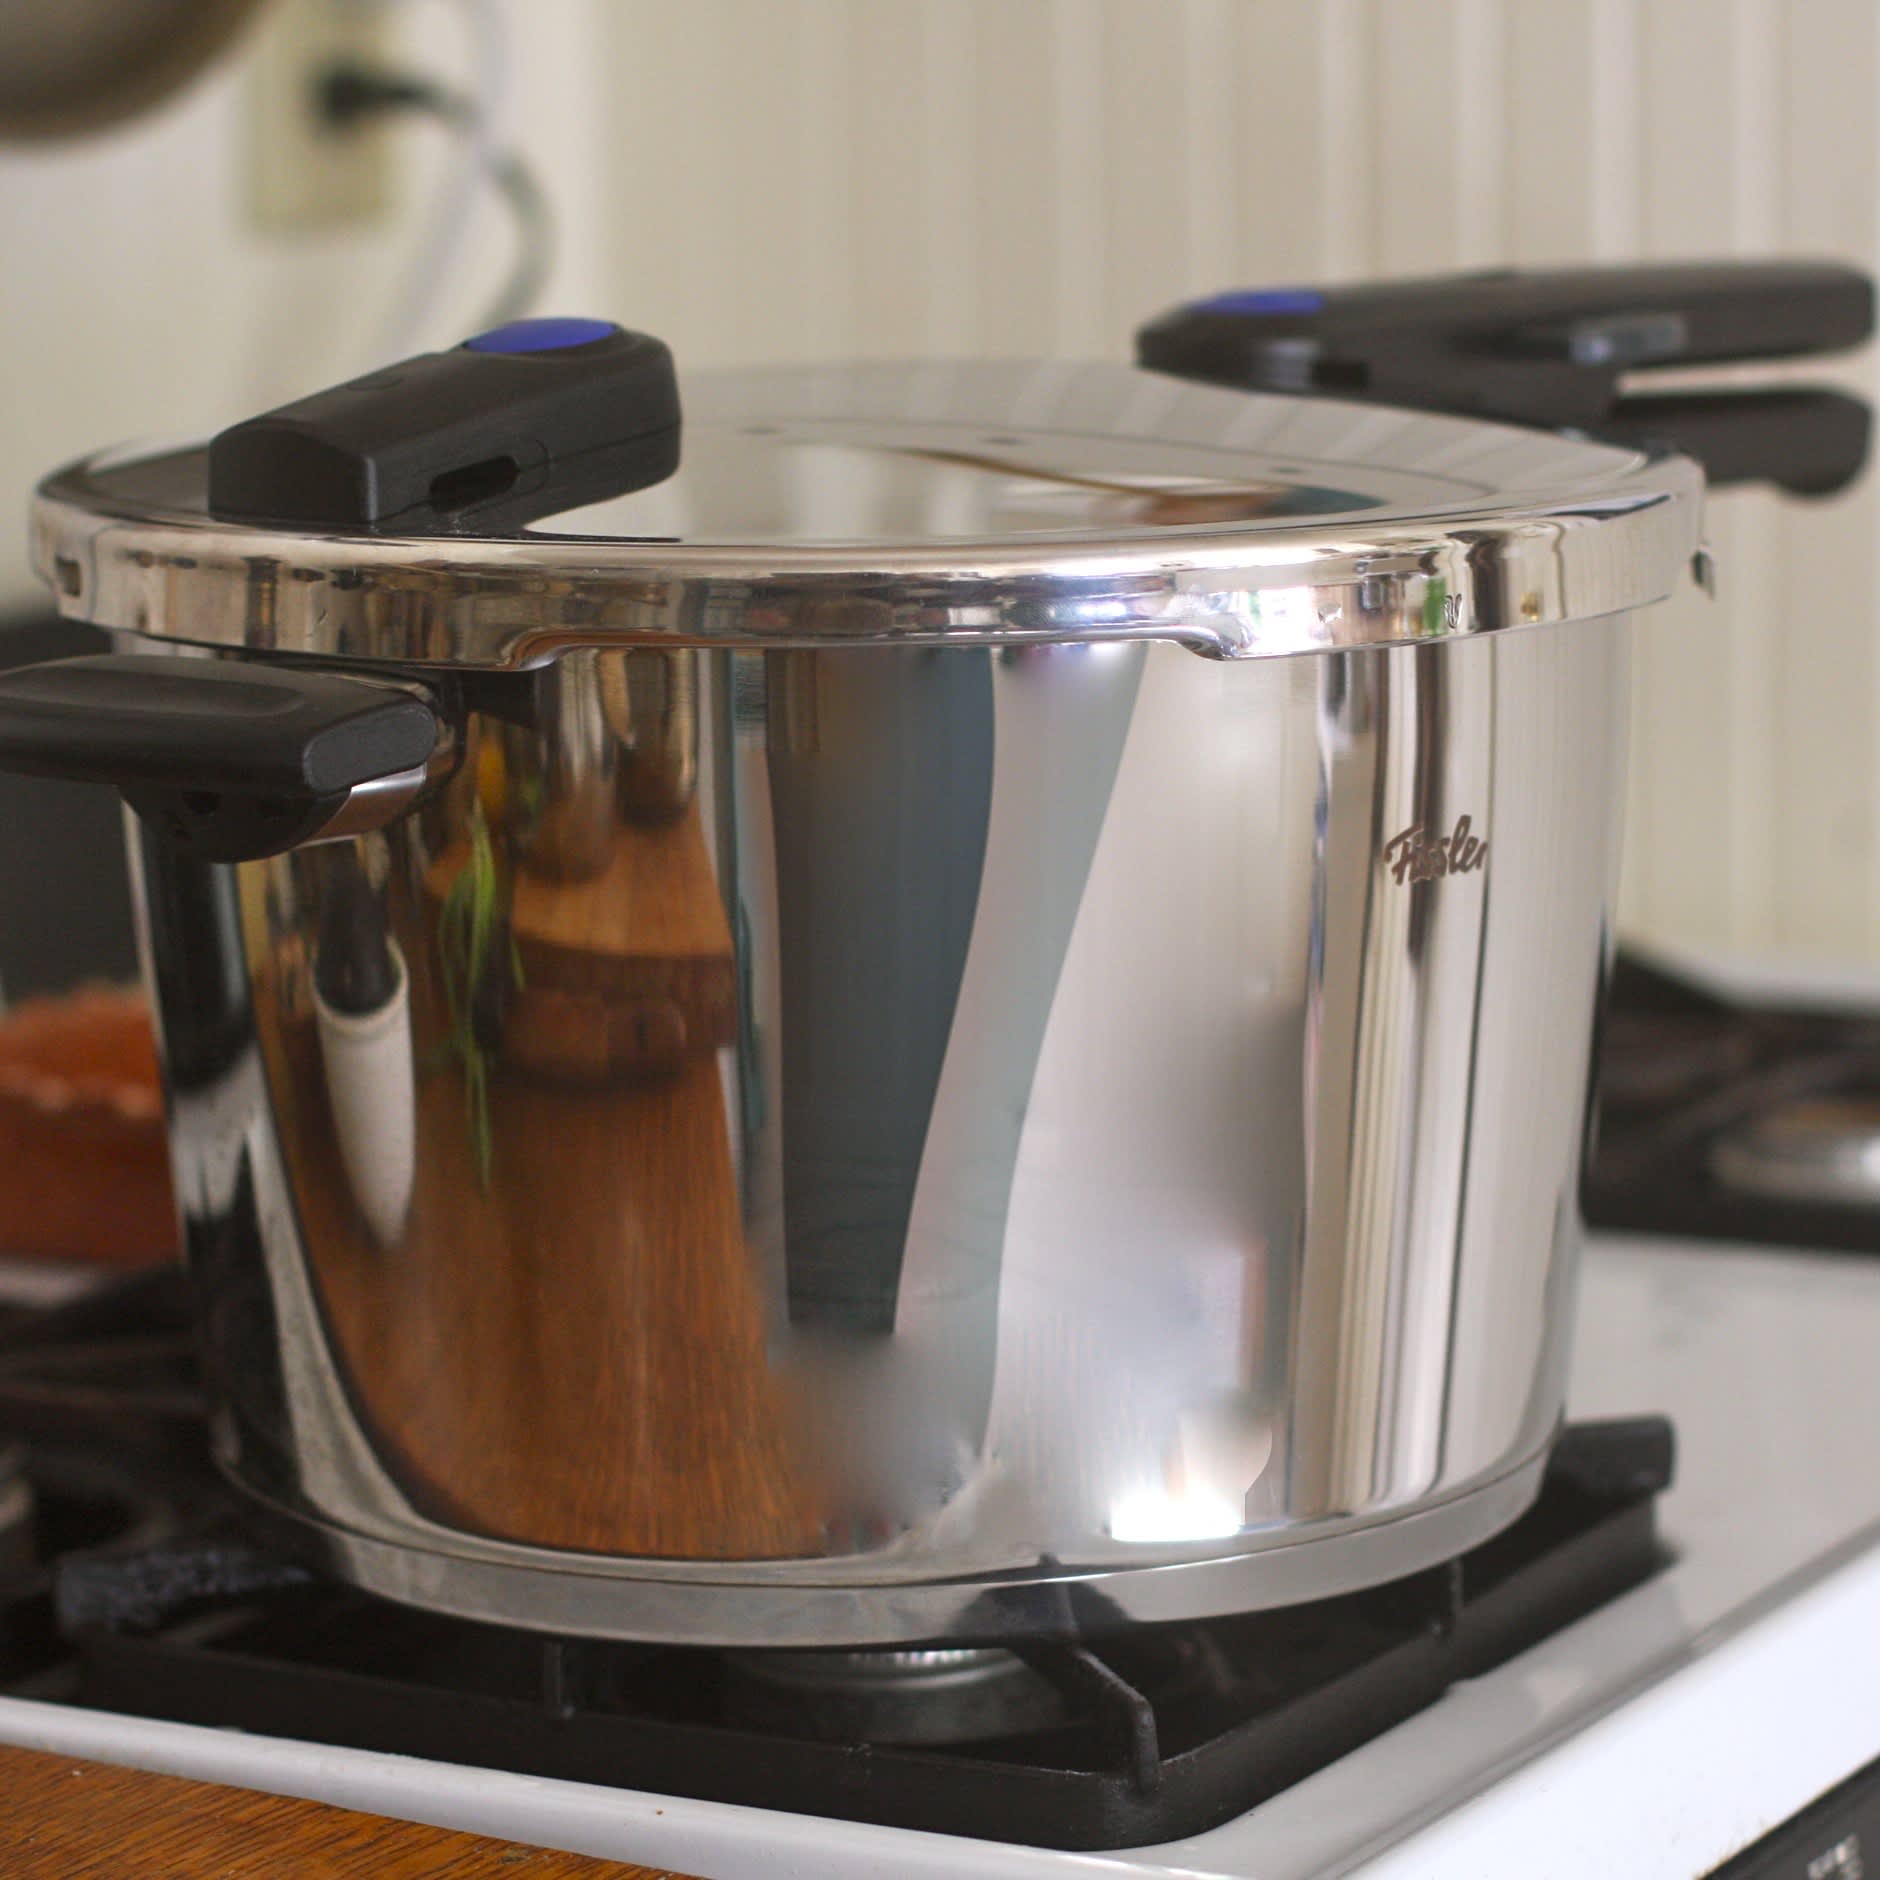 Crockpot vs Pressure Cooker – Cooking Clarified